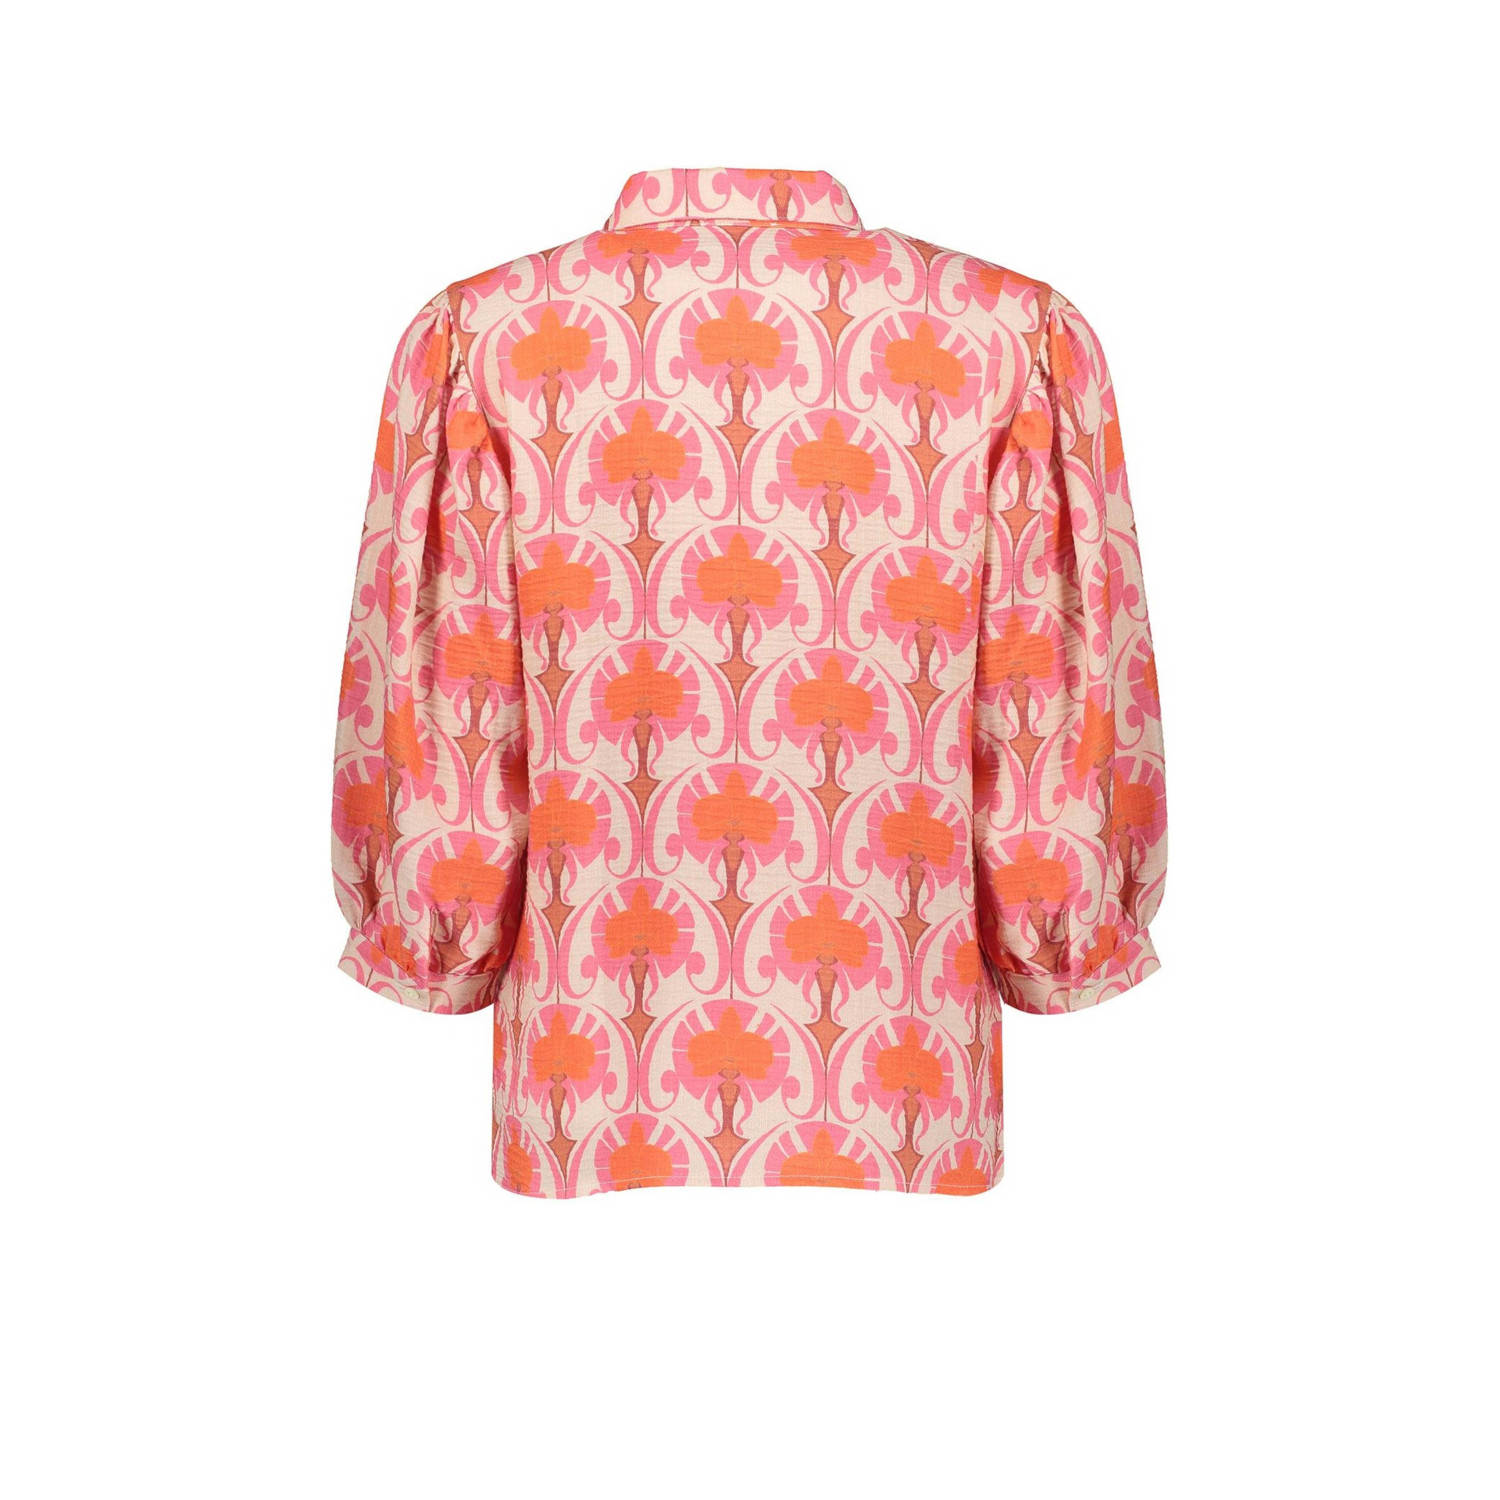 Geisha blouse met all over print roze oranje